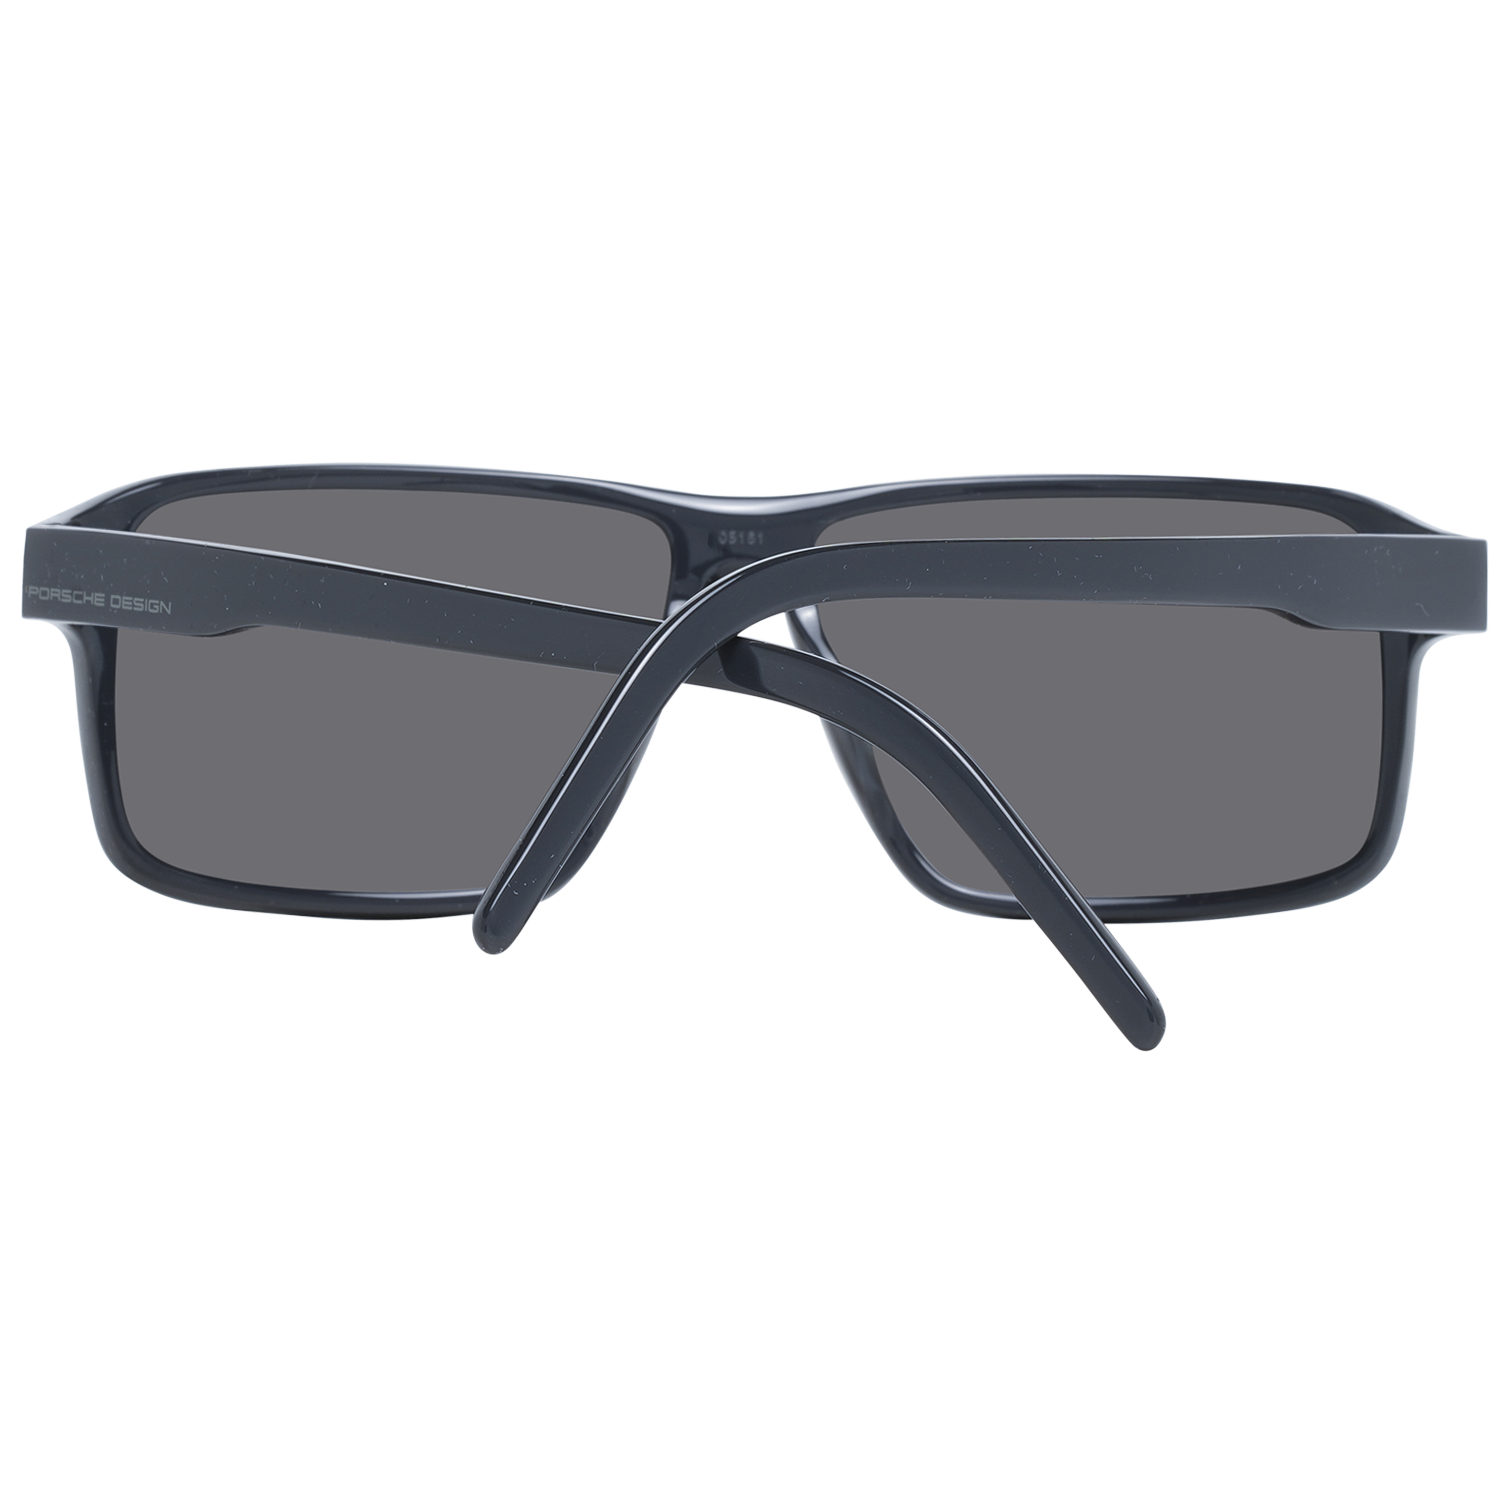 Porsche Design Sunglasses Porsche Design Sunglasses P8634 C 60 Mirrored Eyeglasses Eyewear UK USA Australia 